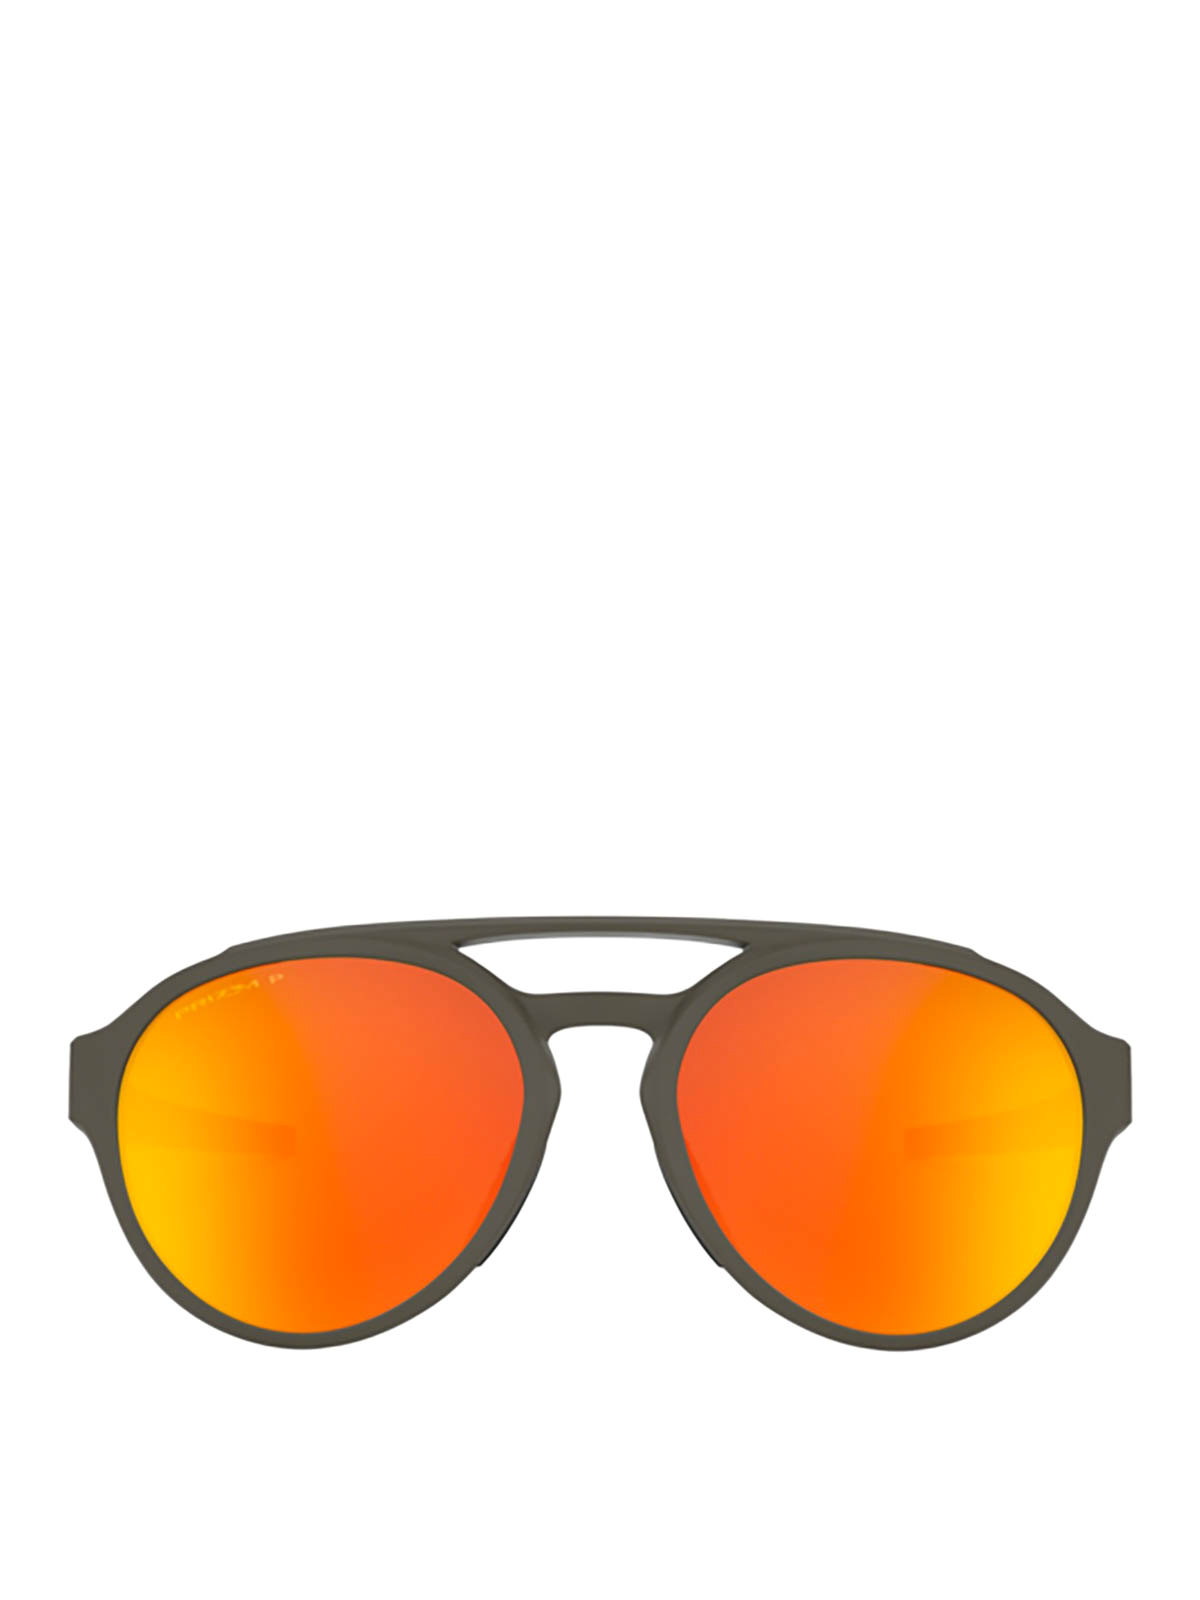 orange lens oakley sunglasses